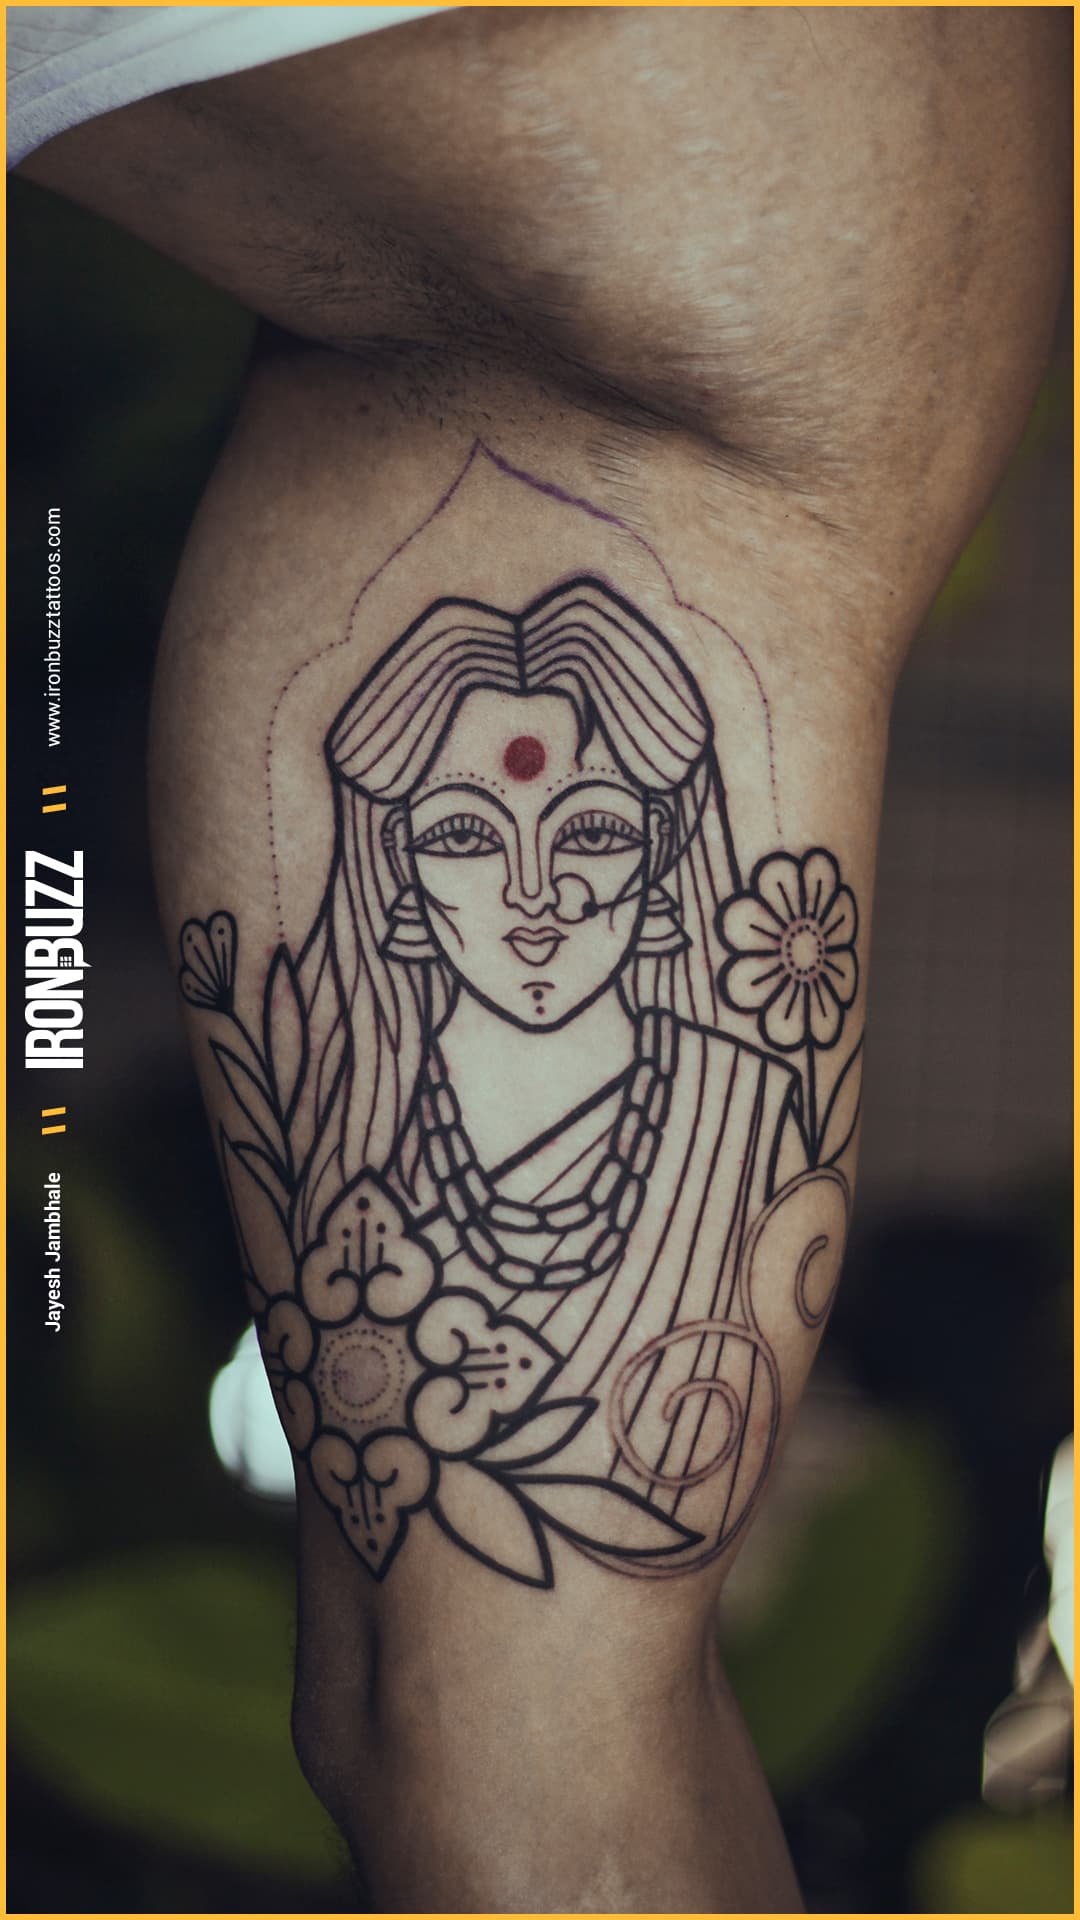 Kali the Hindu goddess